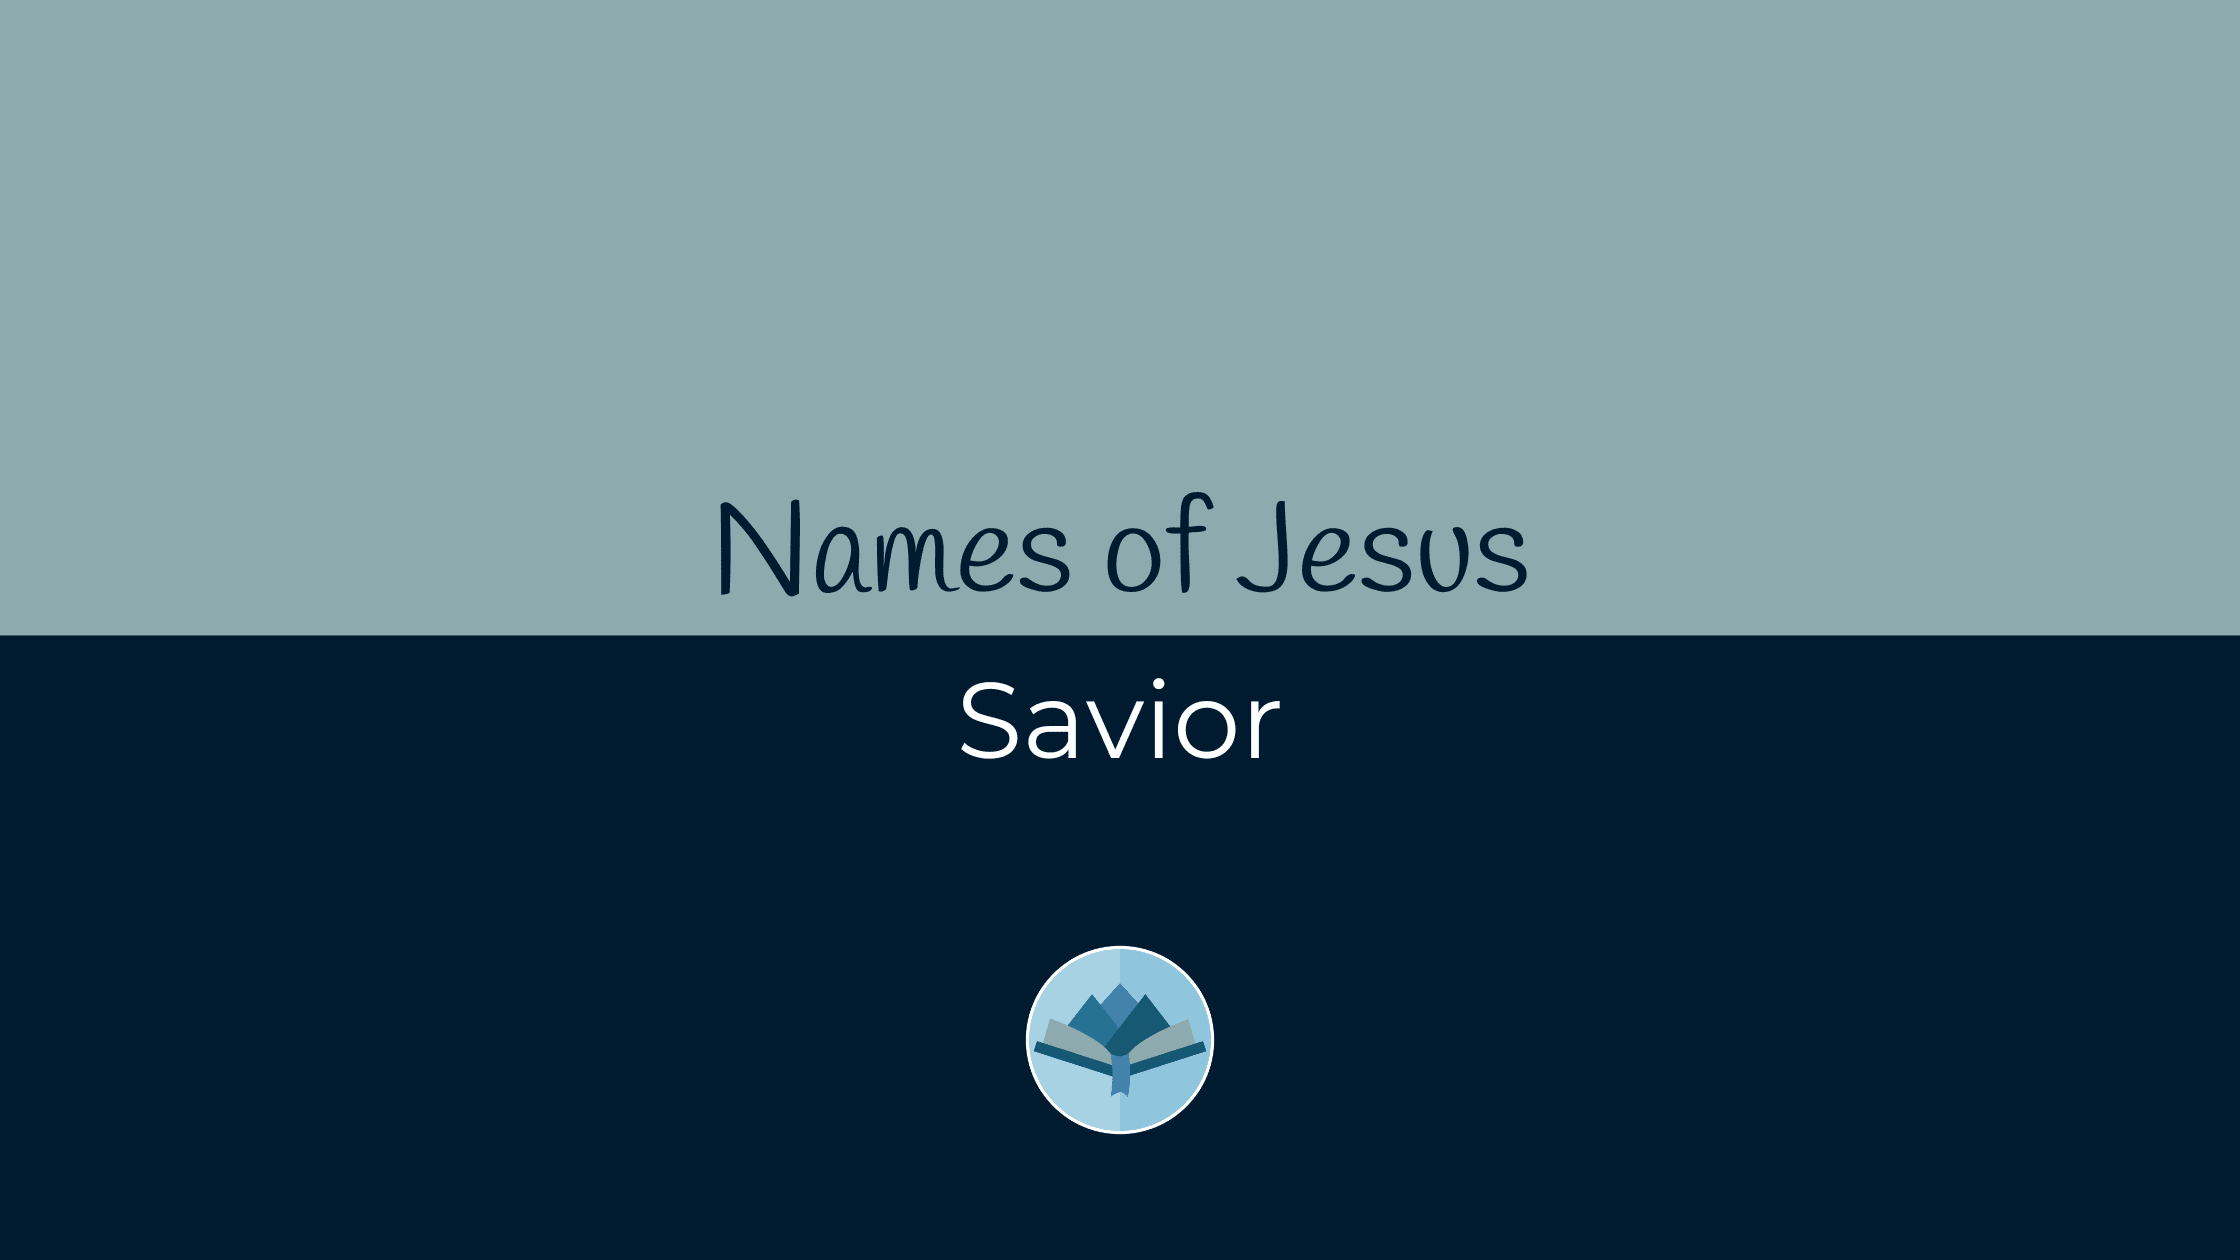 Names of Jesus: Savior